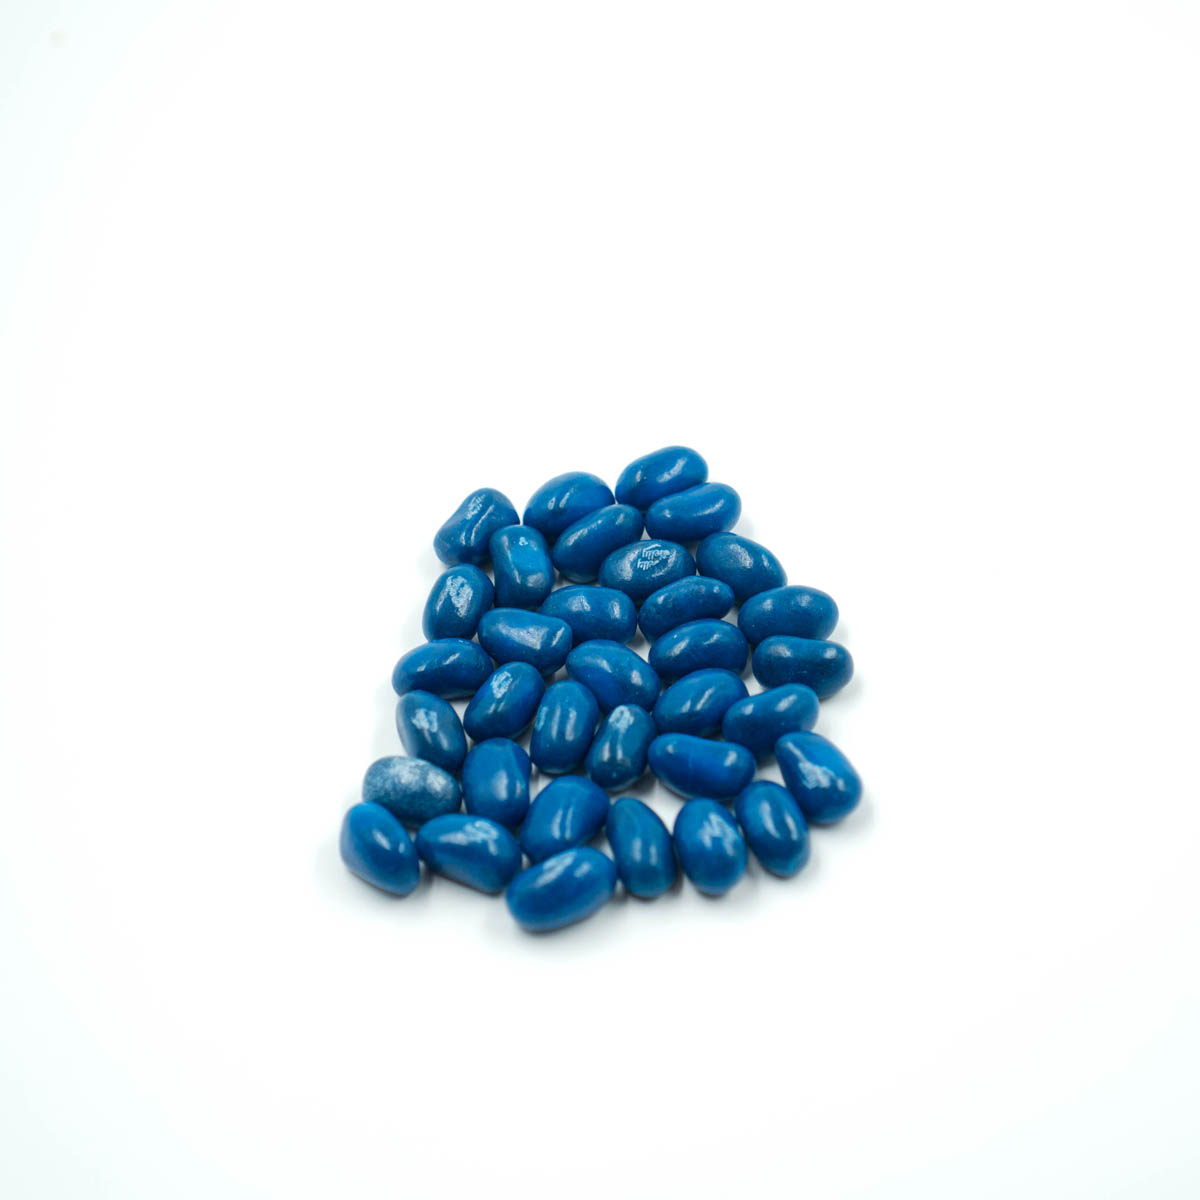 Jelly Belly Blueberry Candy